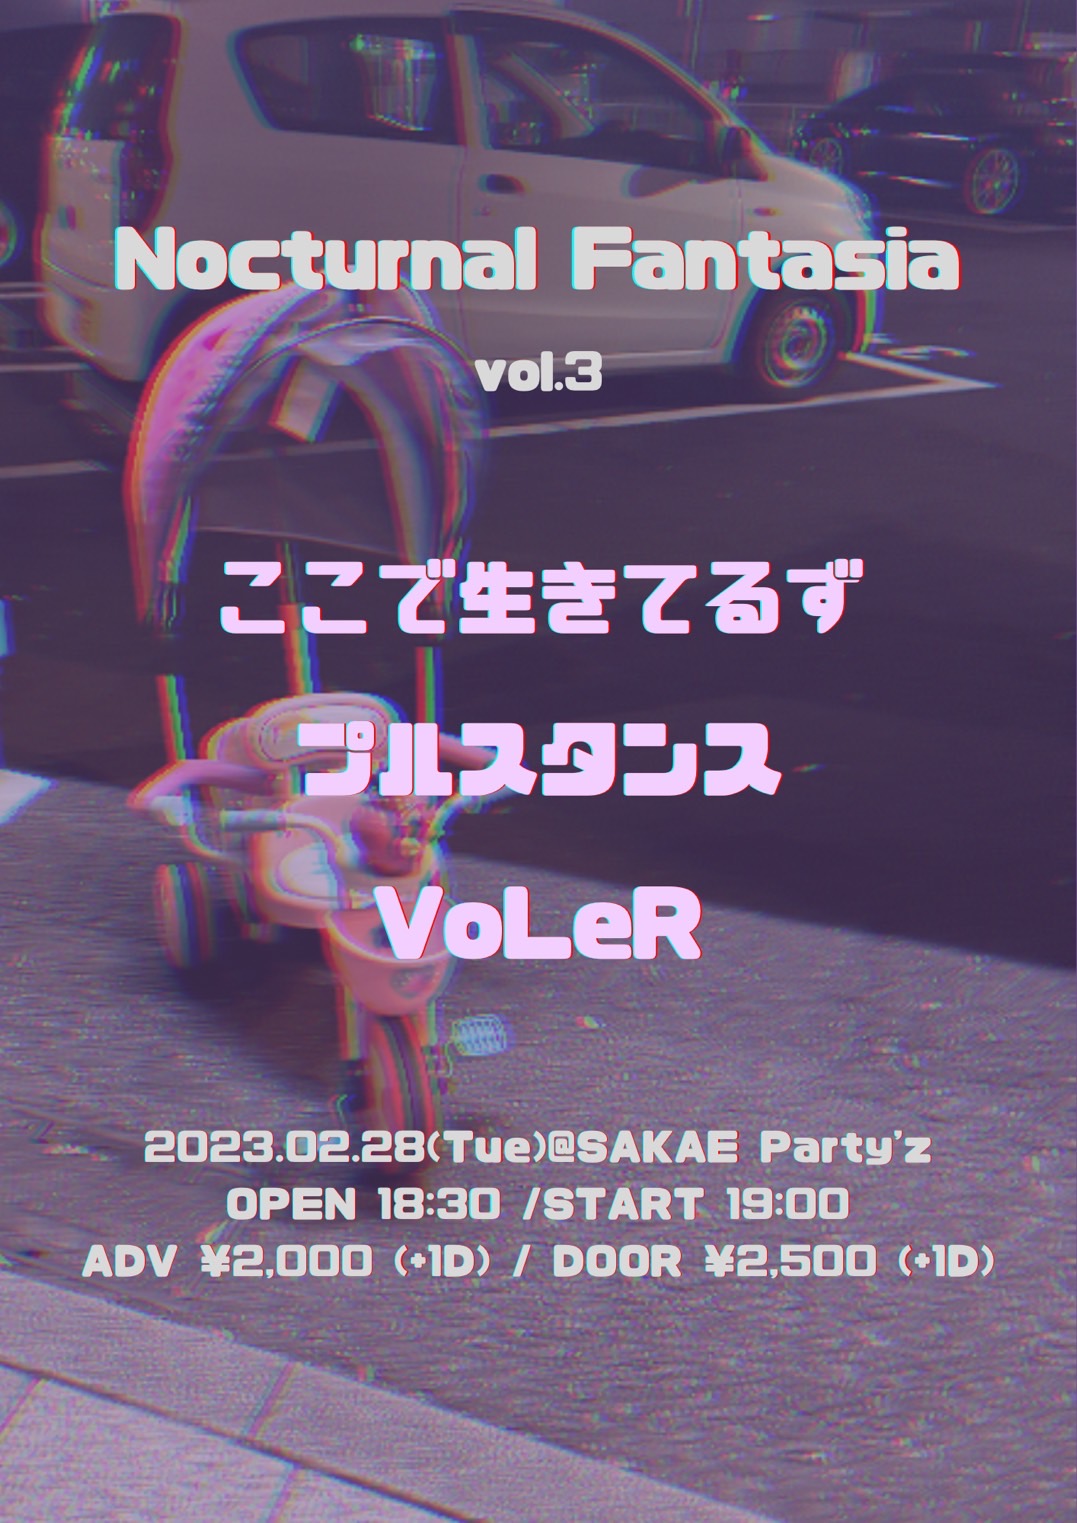 Nocturnal Fantasia vol.3